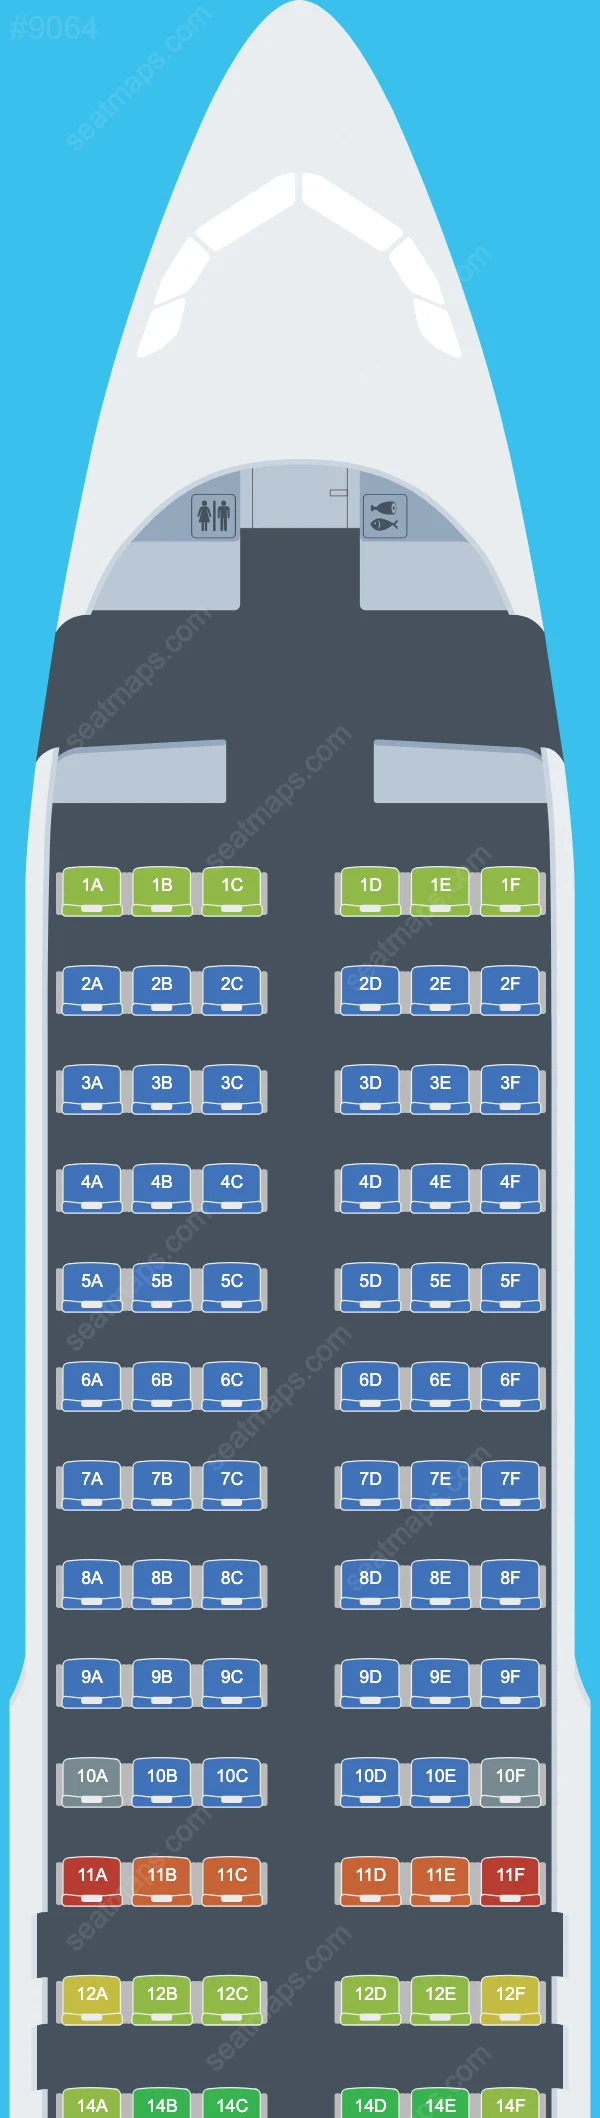 Jetstar Airways Airbus A320 Seat Maps A320-200 V.1